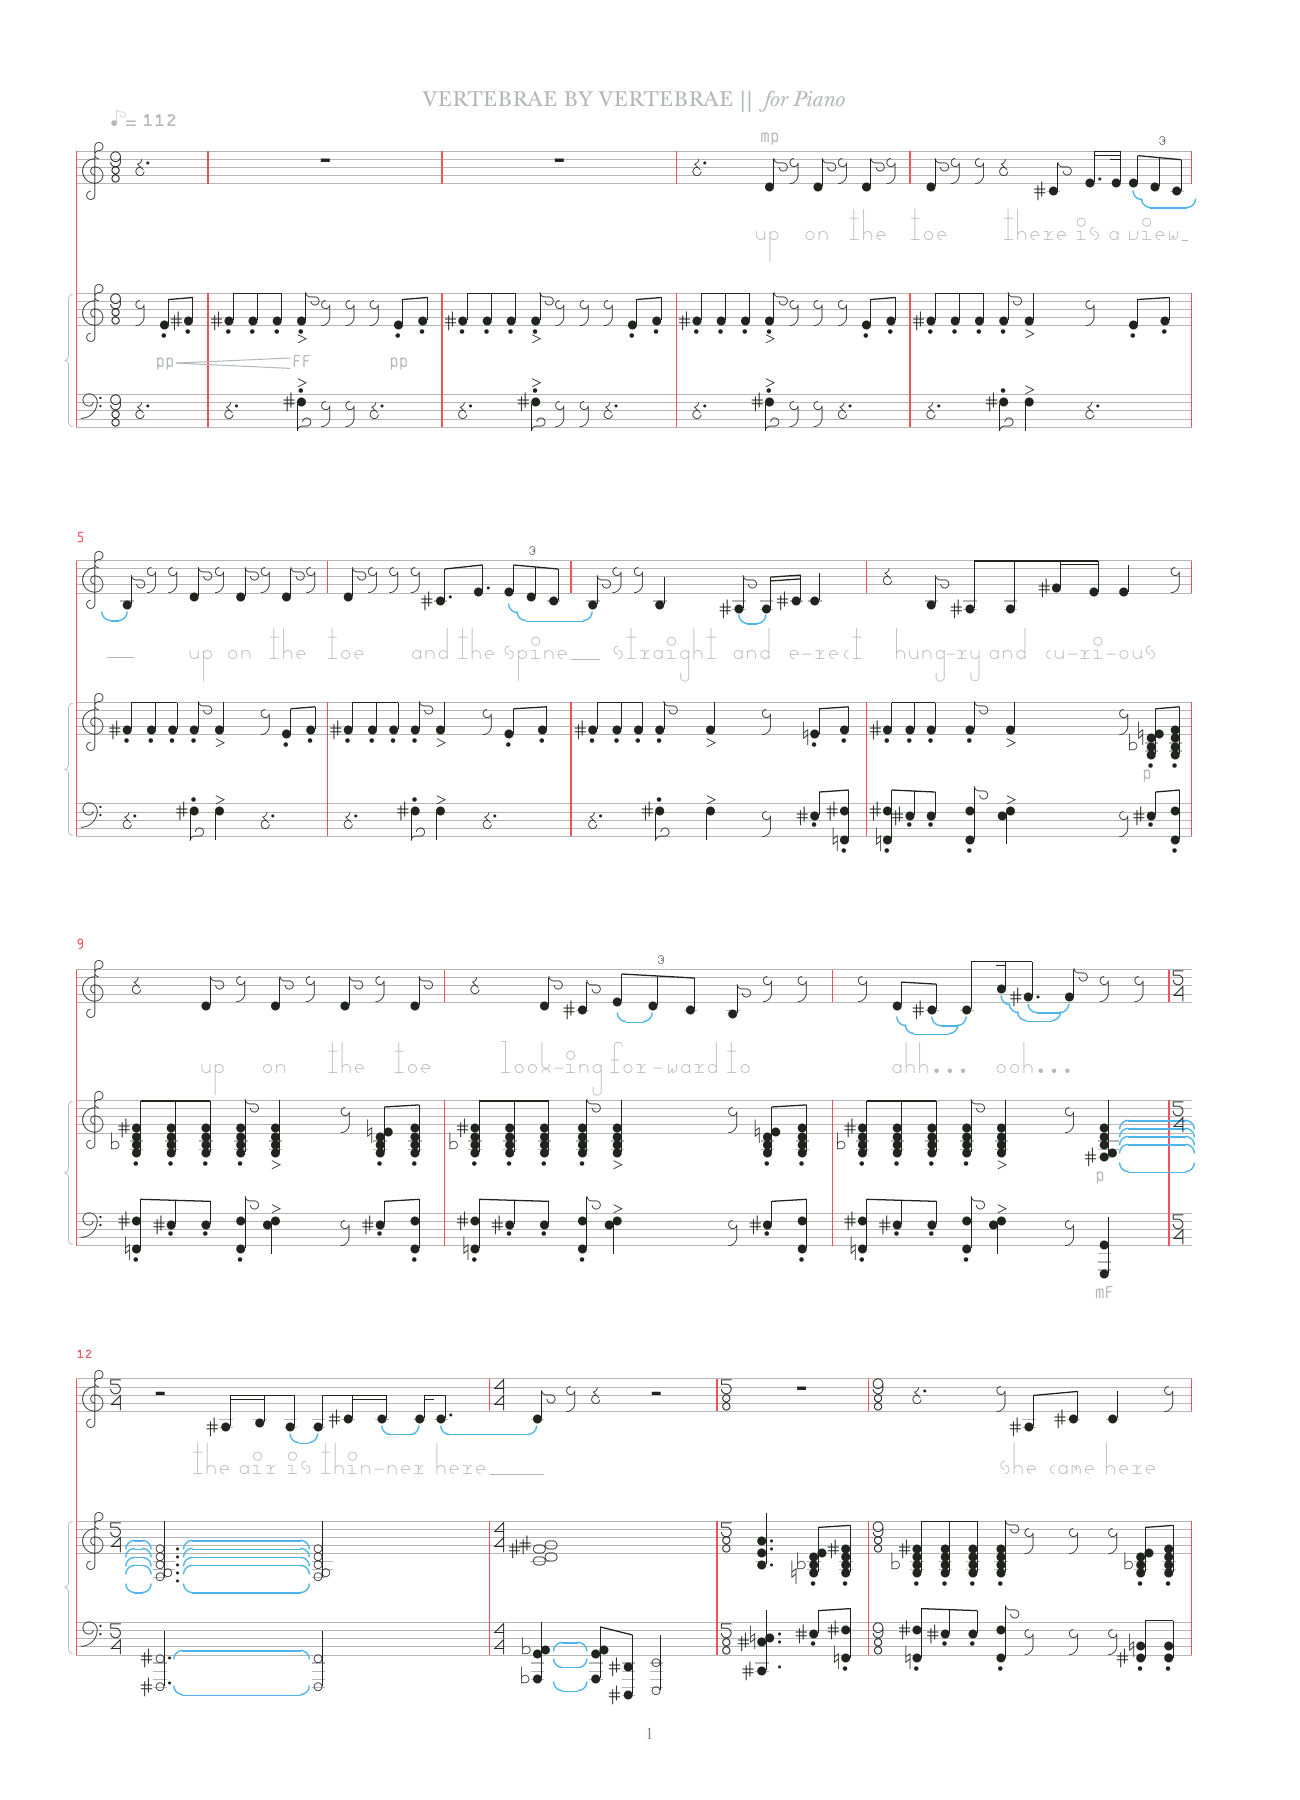 Bjork Vertebrae By Vertebrae Sheet Music Notes & Chords for Piano & Vocal - Download or Print PDF